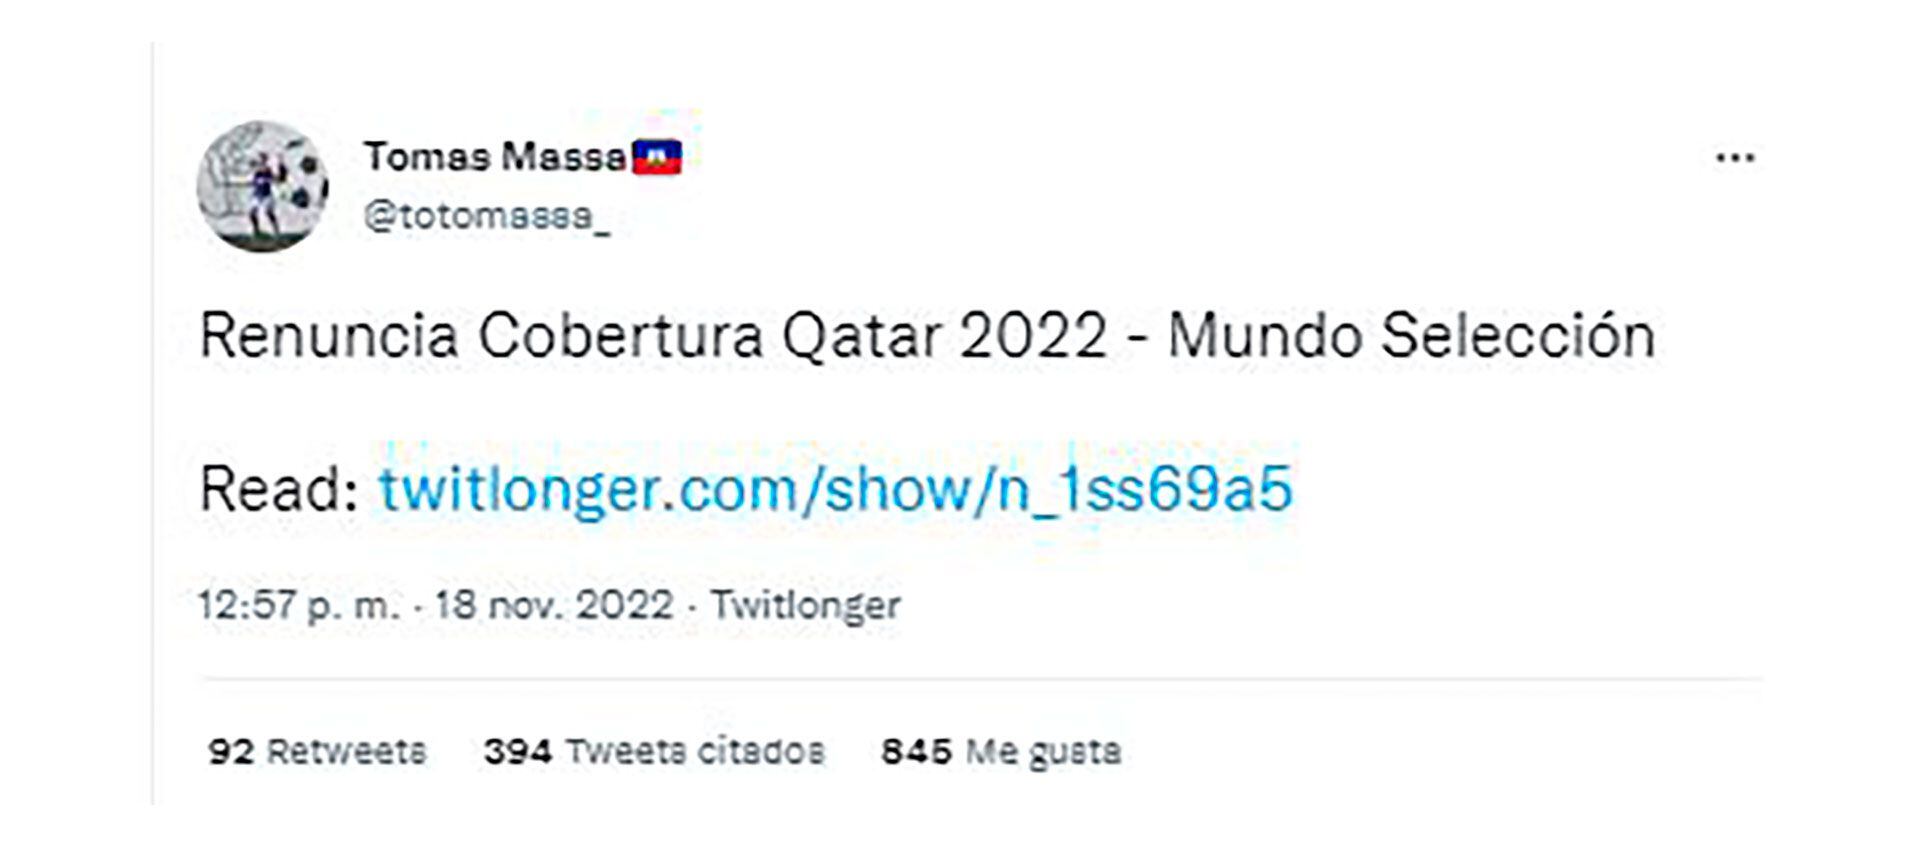 Renuncia hijo de Massa tomas mundial qatar